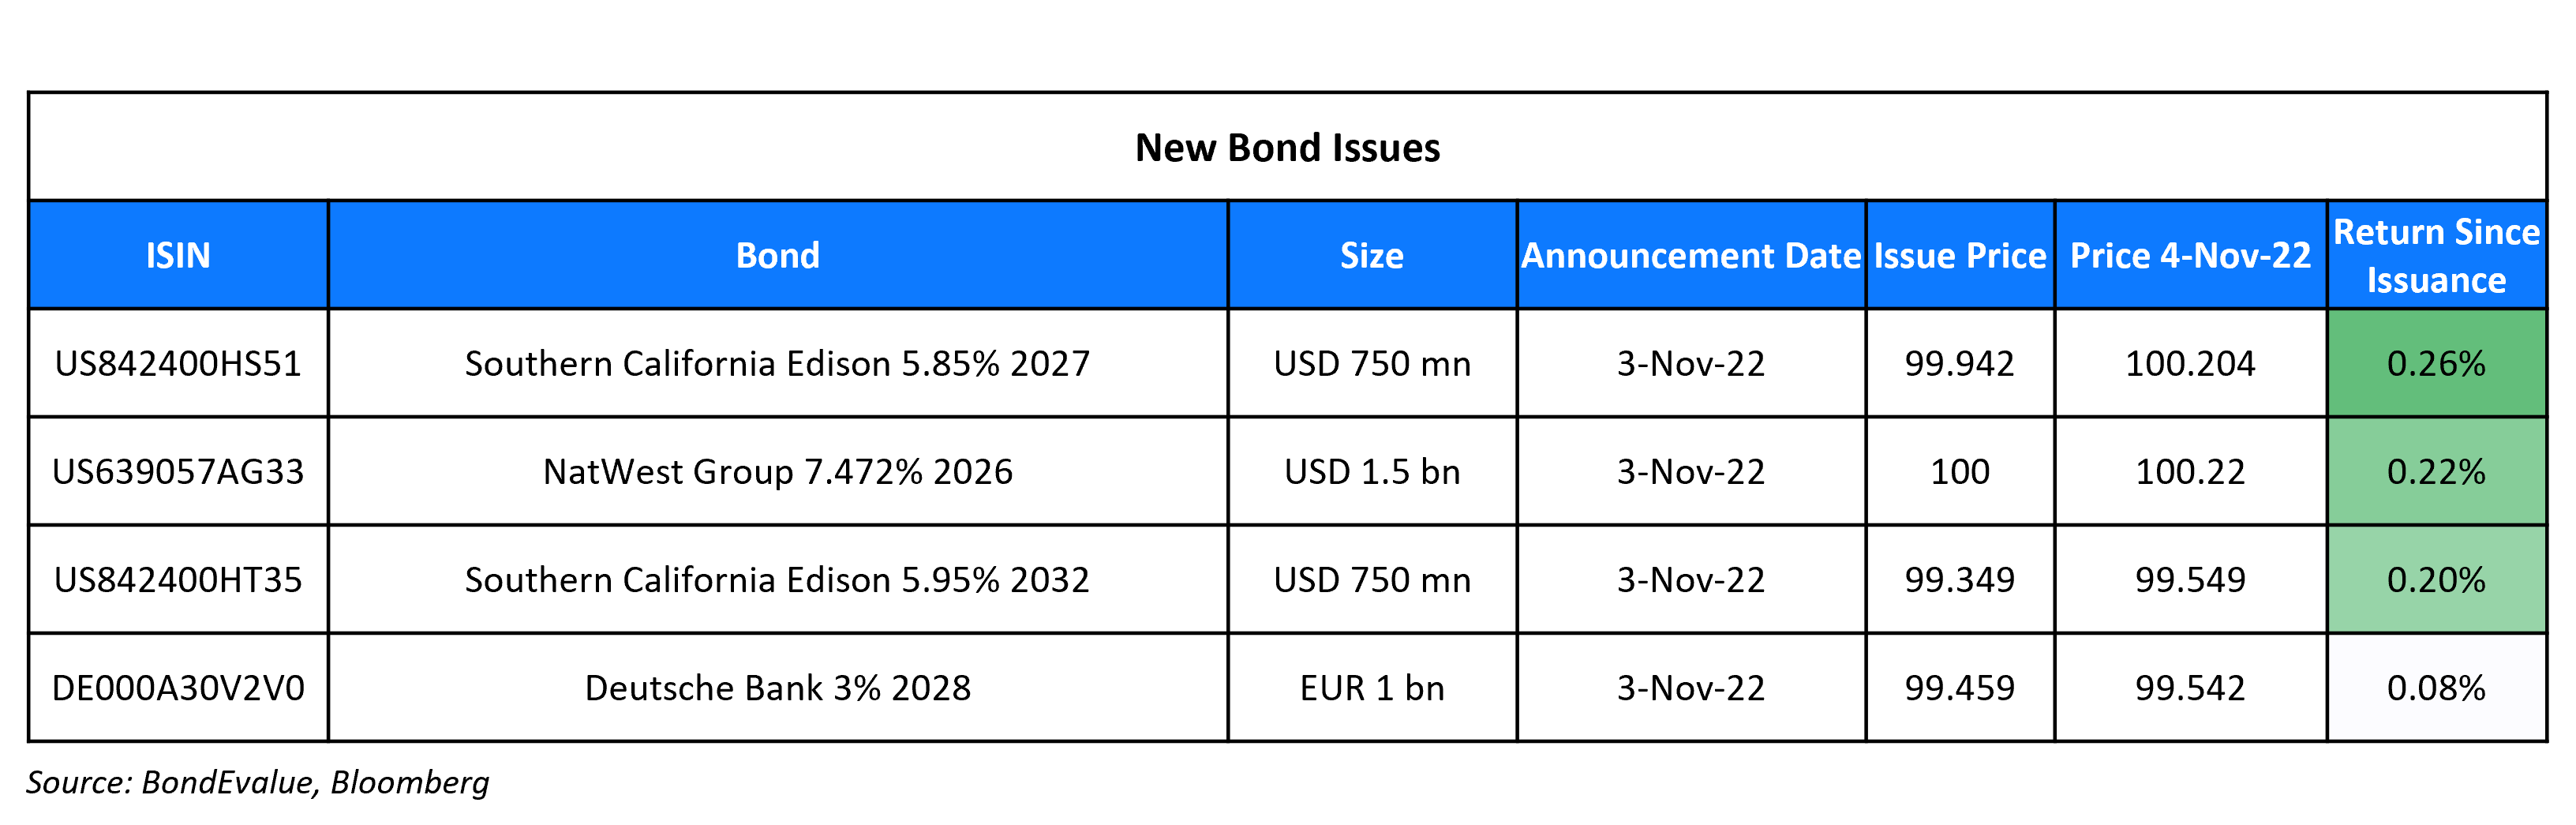 New Bond Issues 4 Nov 22